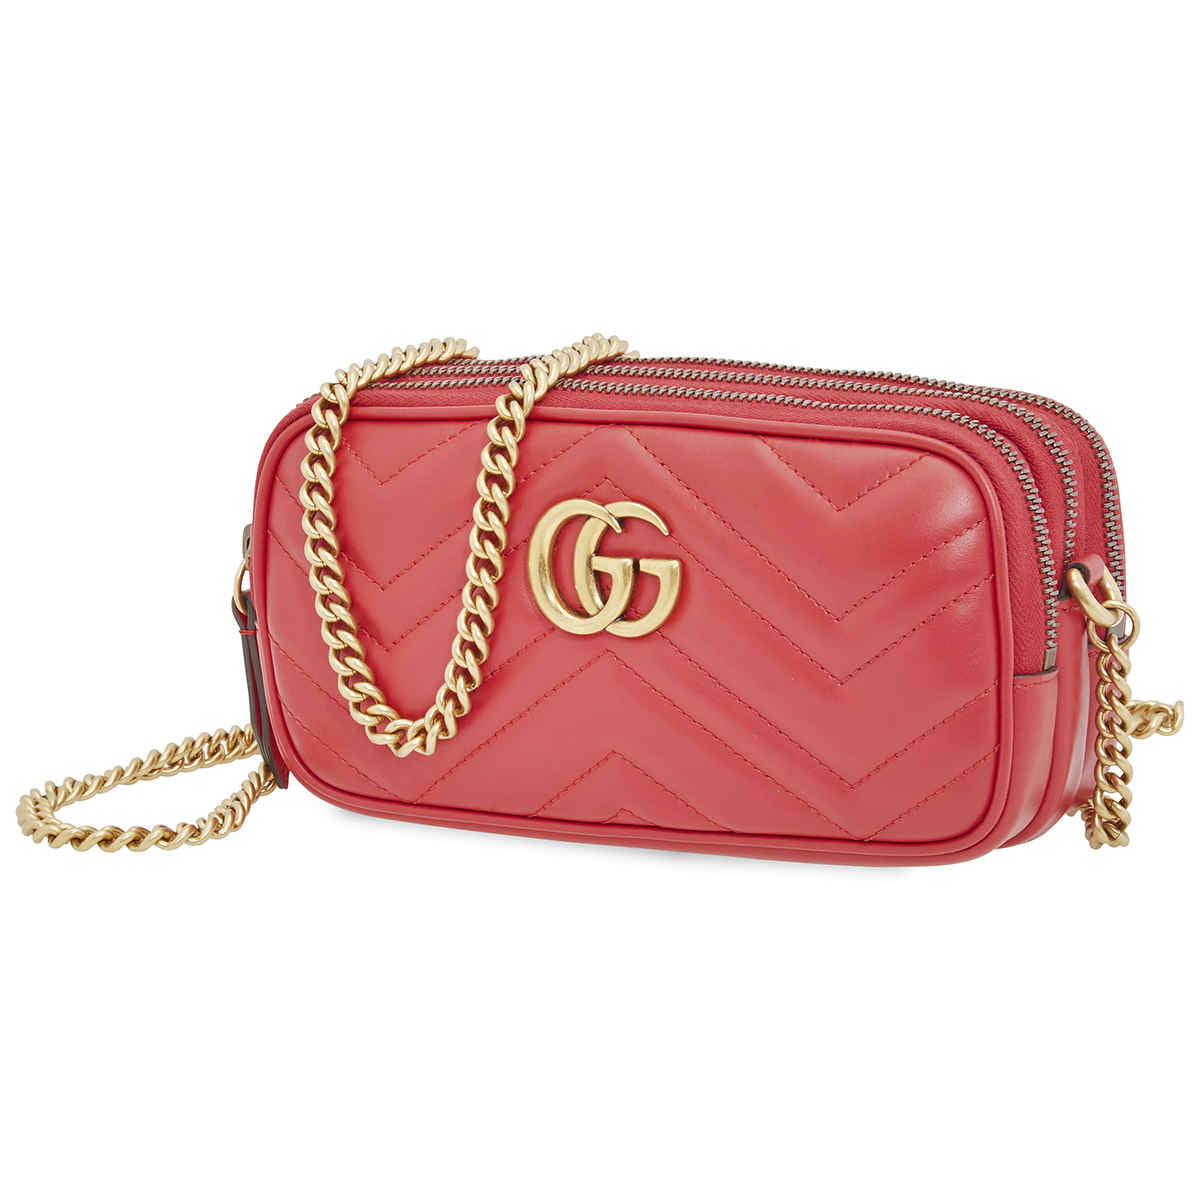 gg mini chain bag